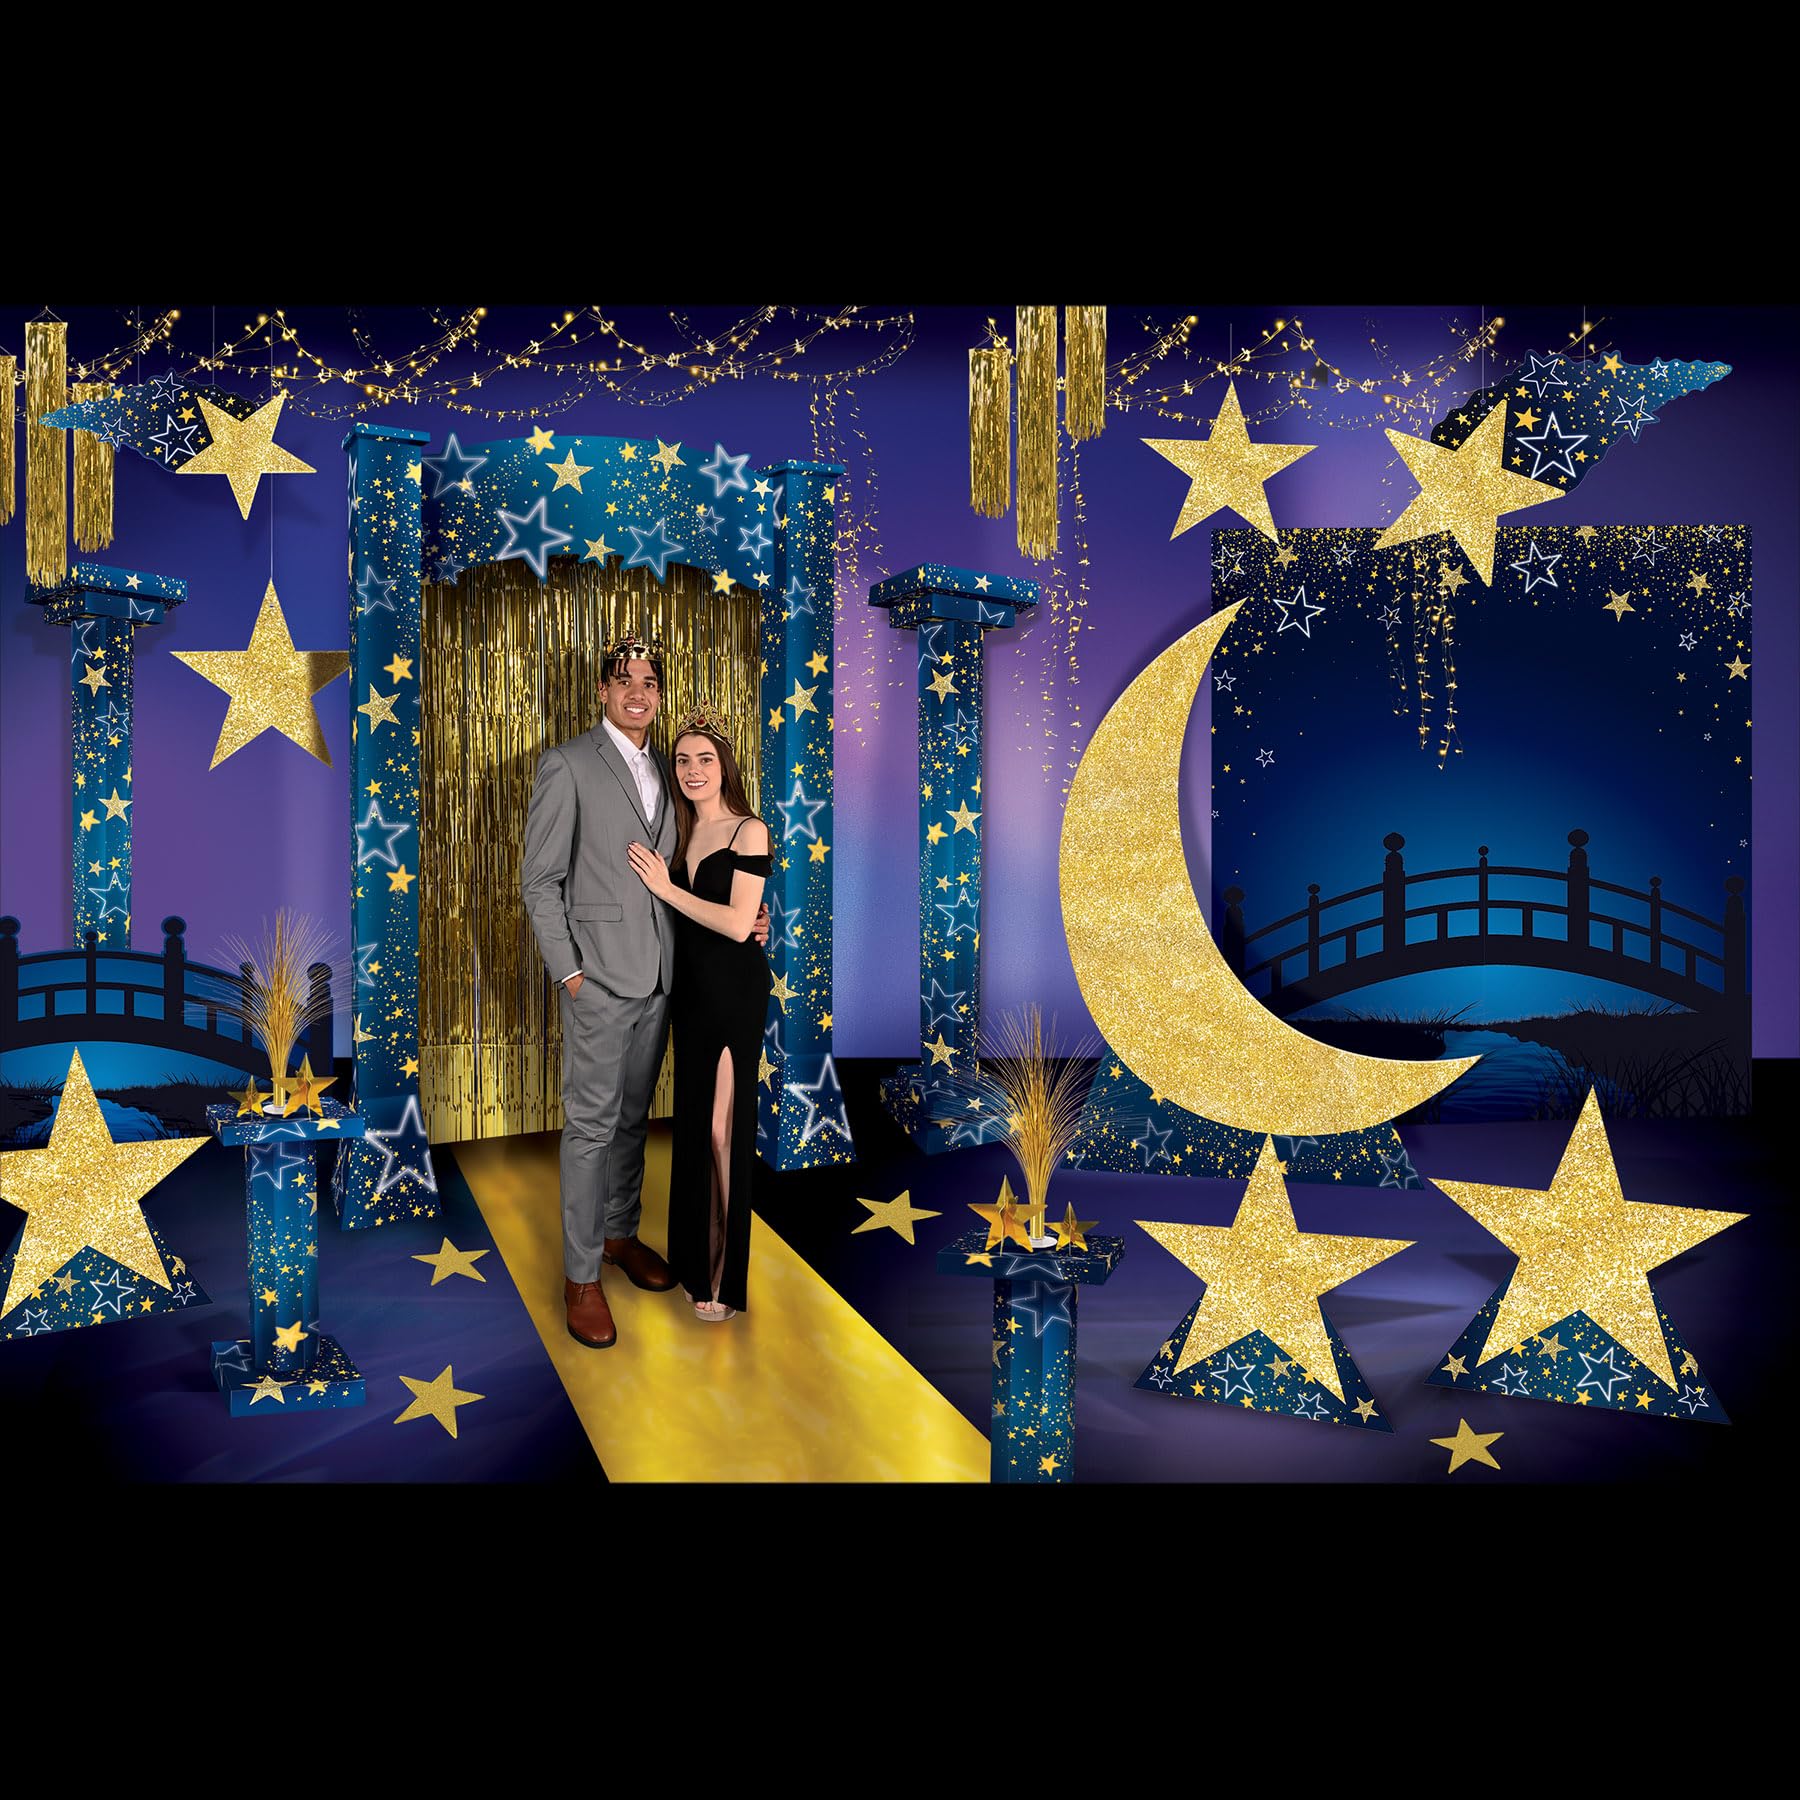 Beistle Large 7' x 6' Cardboard Awards Night Starry-Night Bridge Photo Prop Backdrop, Photography Background, Prom Decor